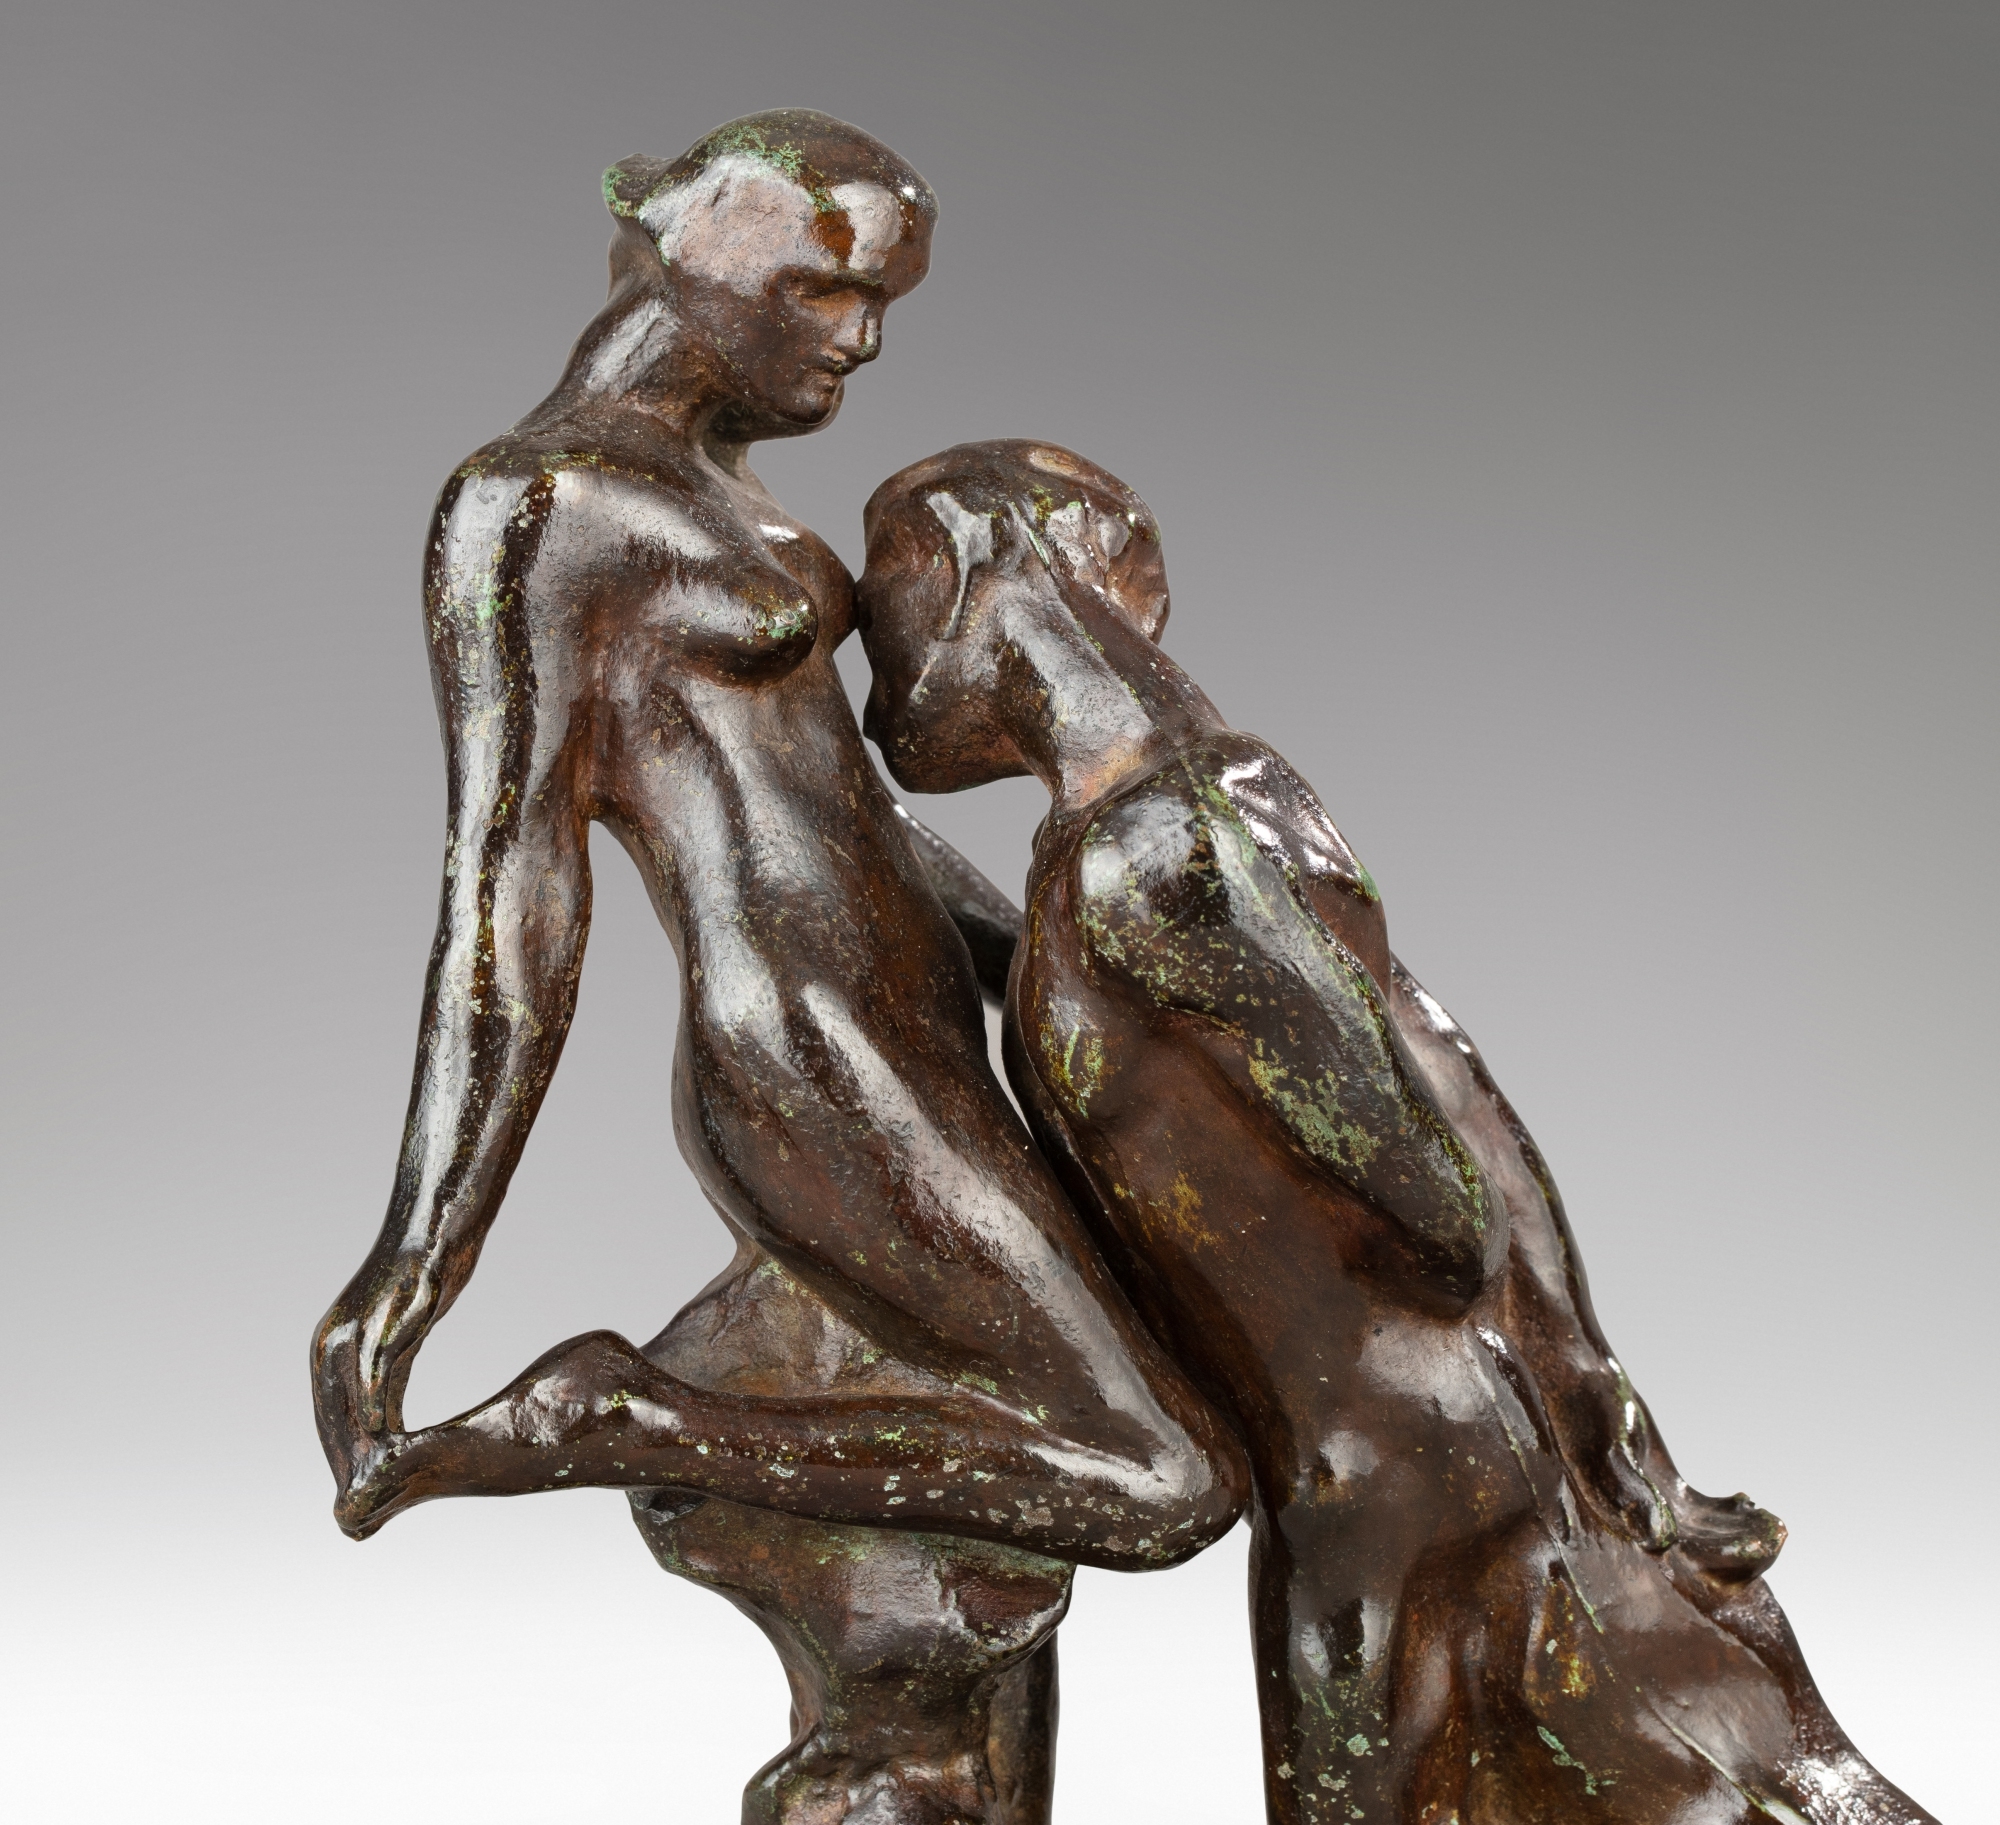 Artwork by Auguste Rodin, L'Éternelle idole, petit modèle, Made of bronze, nuanced brown patina